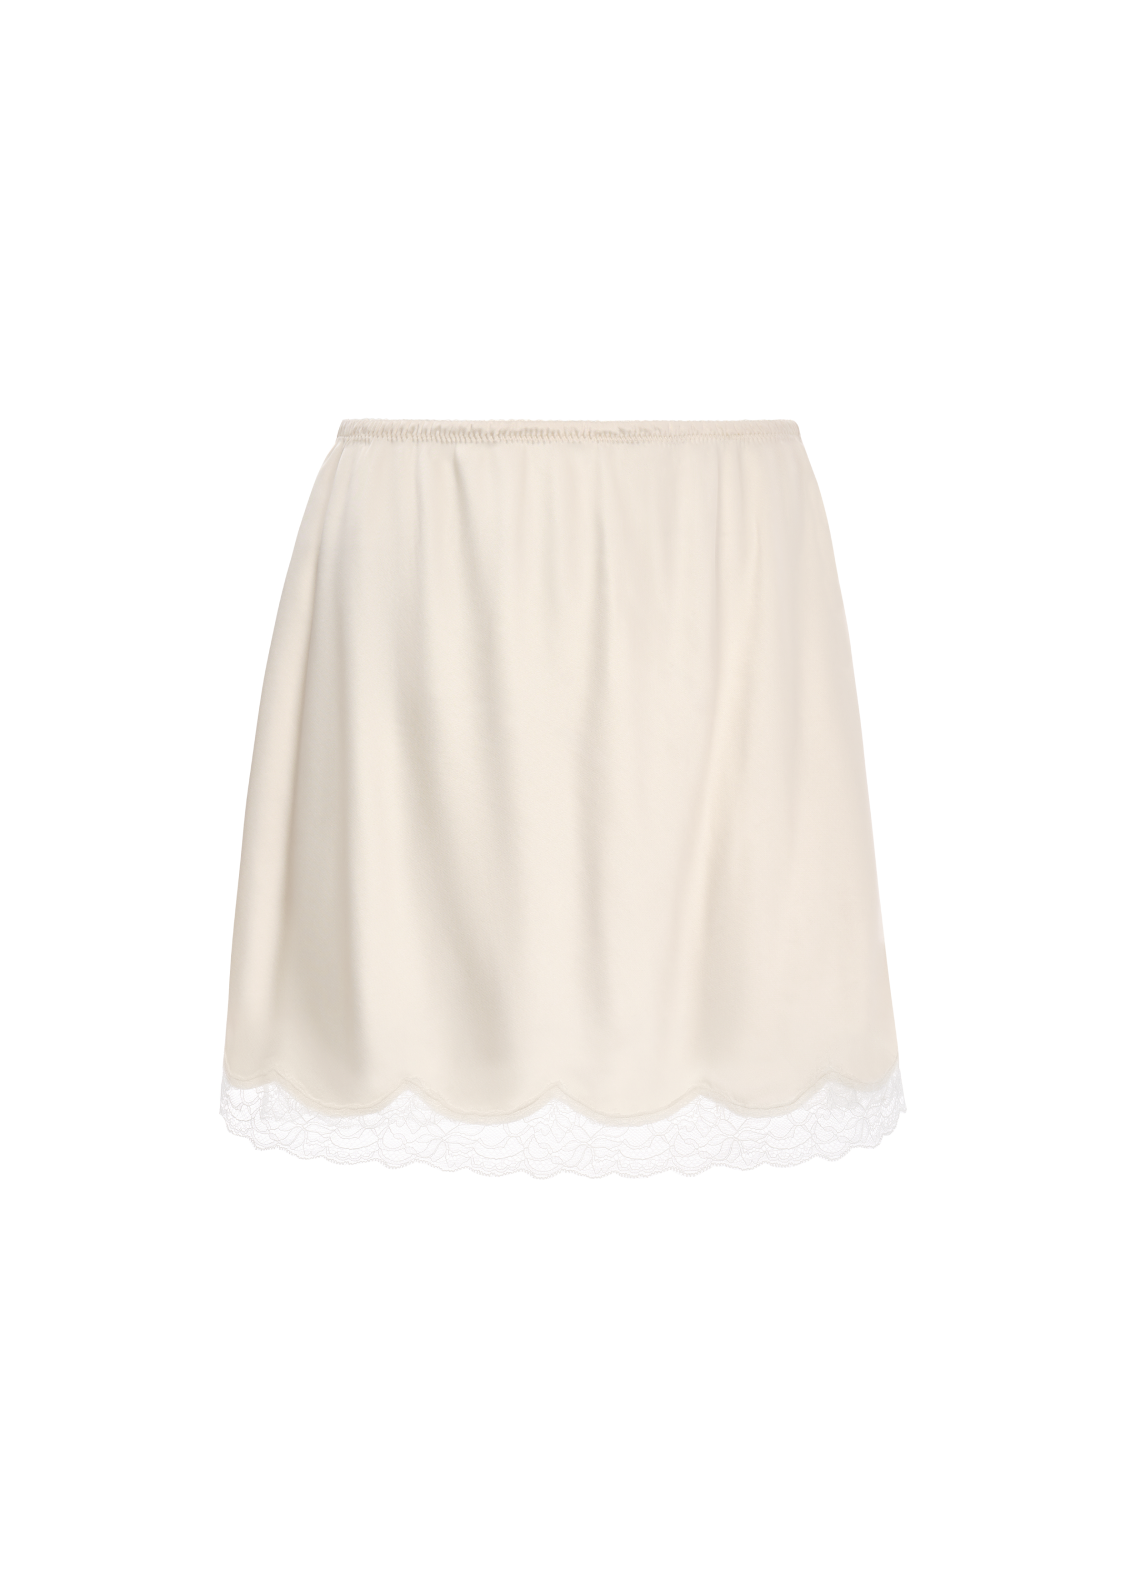 Lace mini skirt in milk